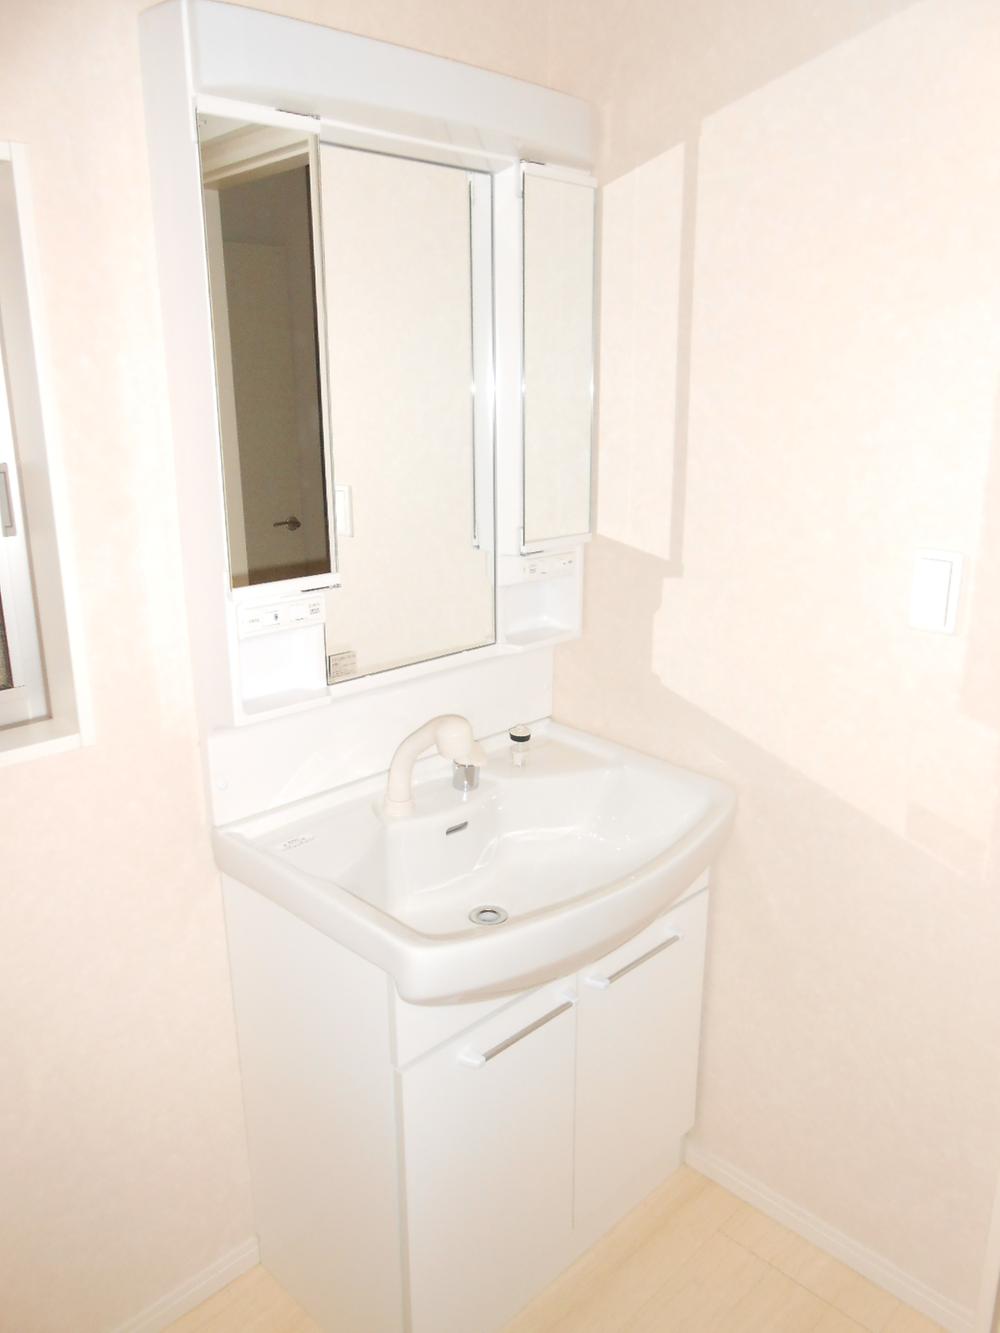 Wash basin, toilet. Shampoo dresser vanity